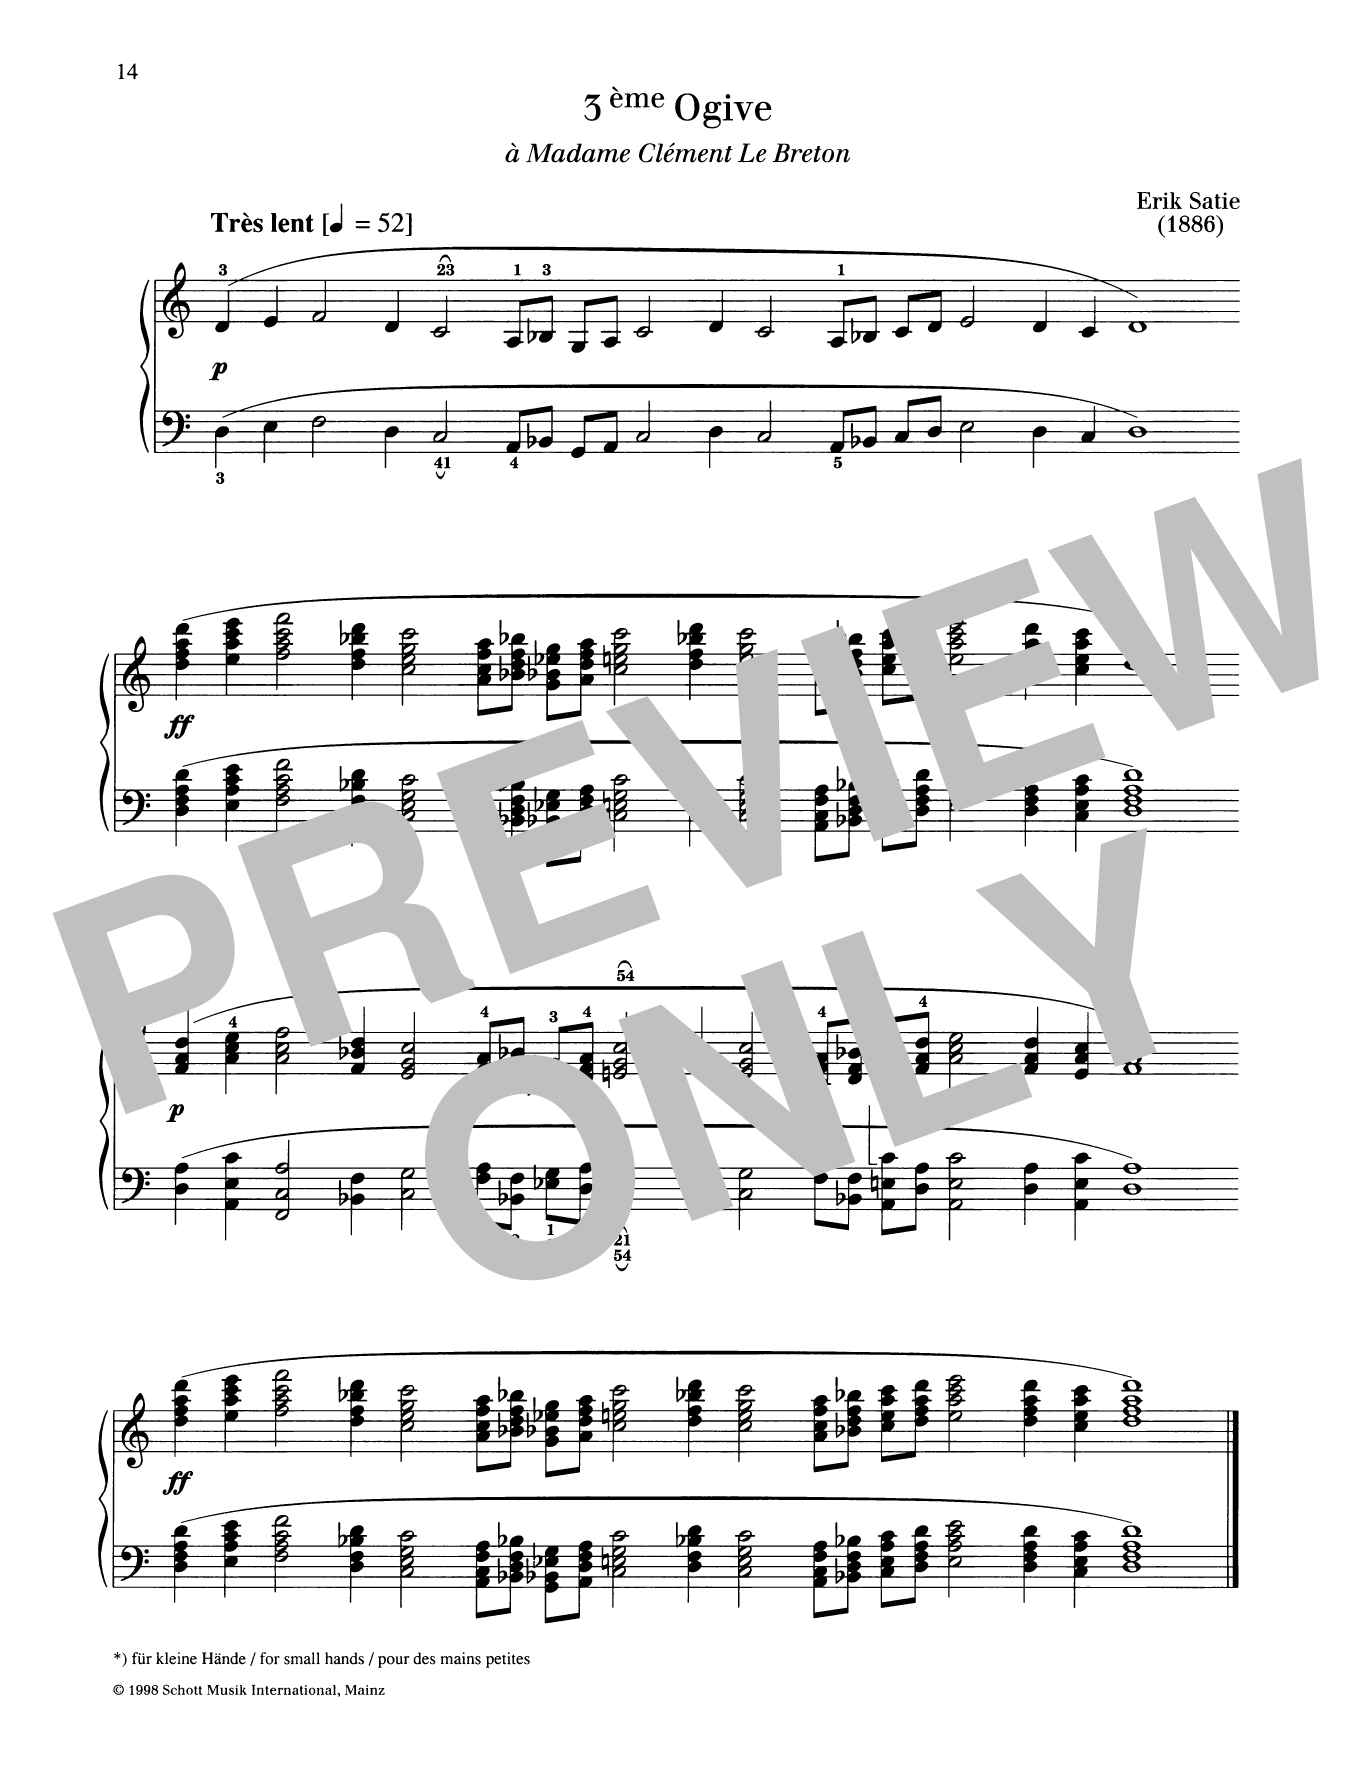 Erik Satie 3ème Ogive Sheet Music Notes & Chords for Piano Solo - Download or Print PDF